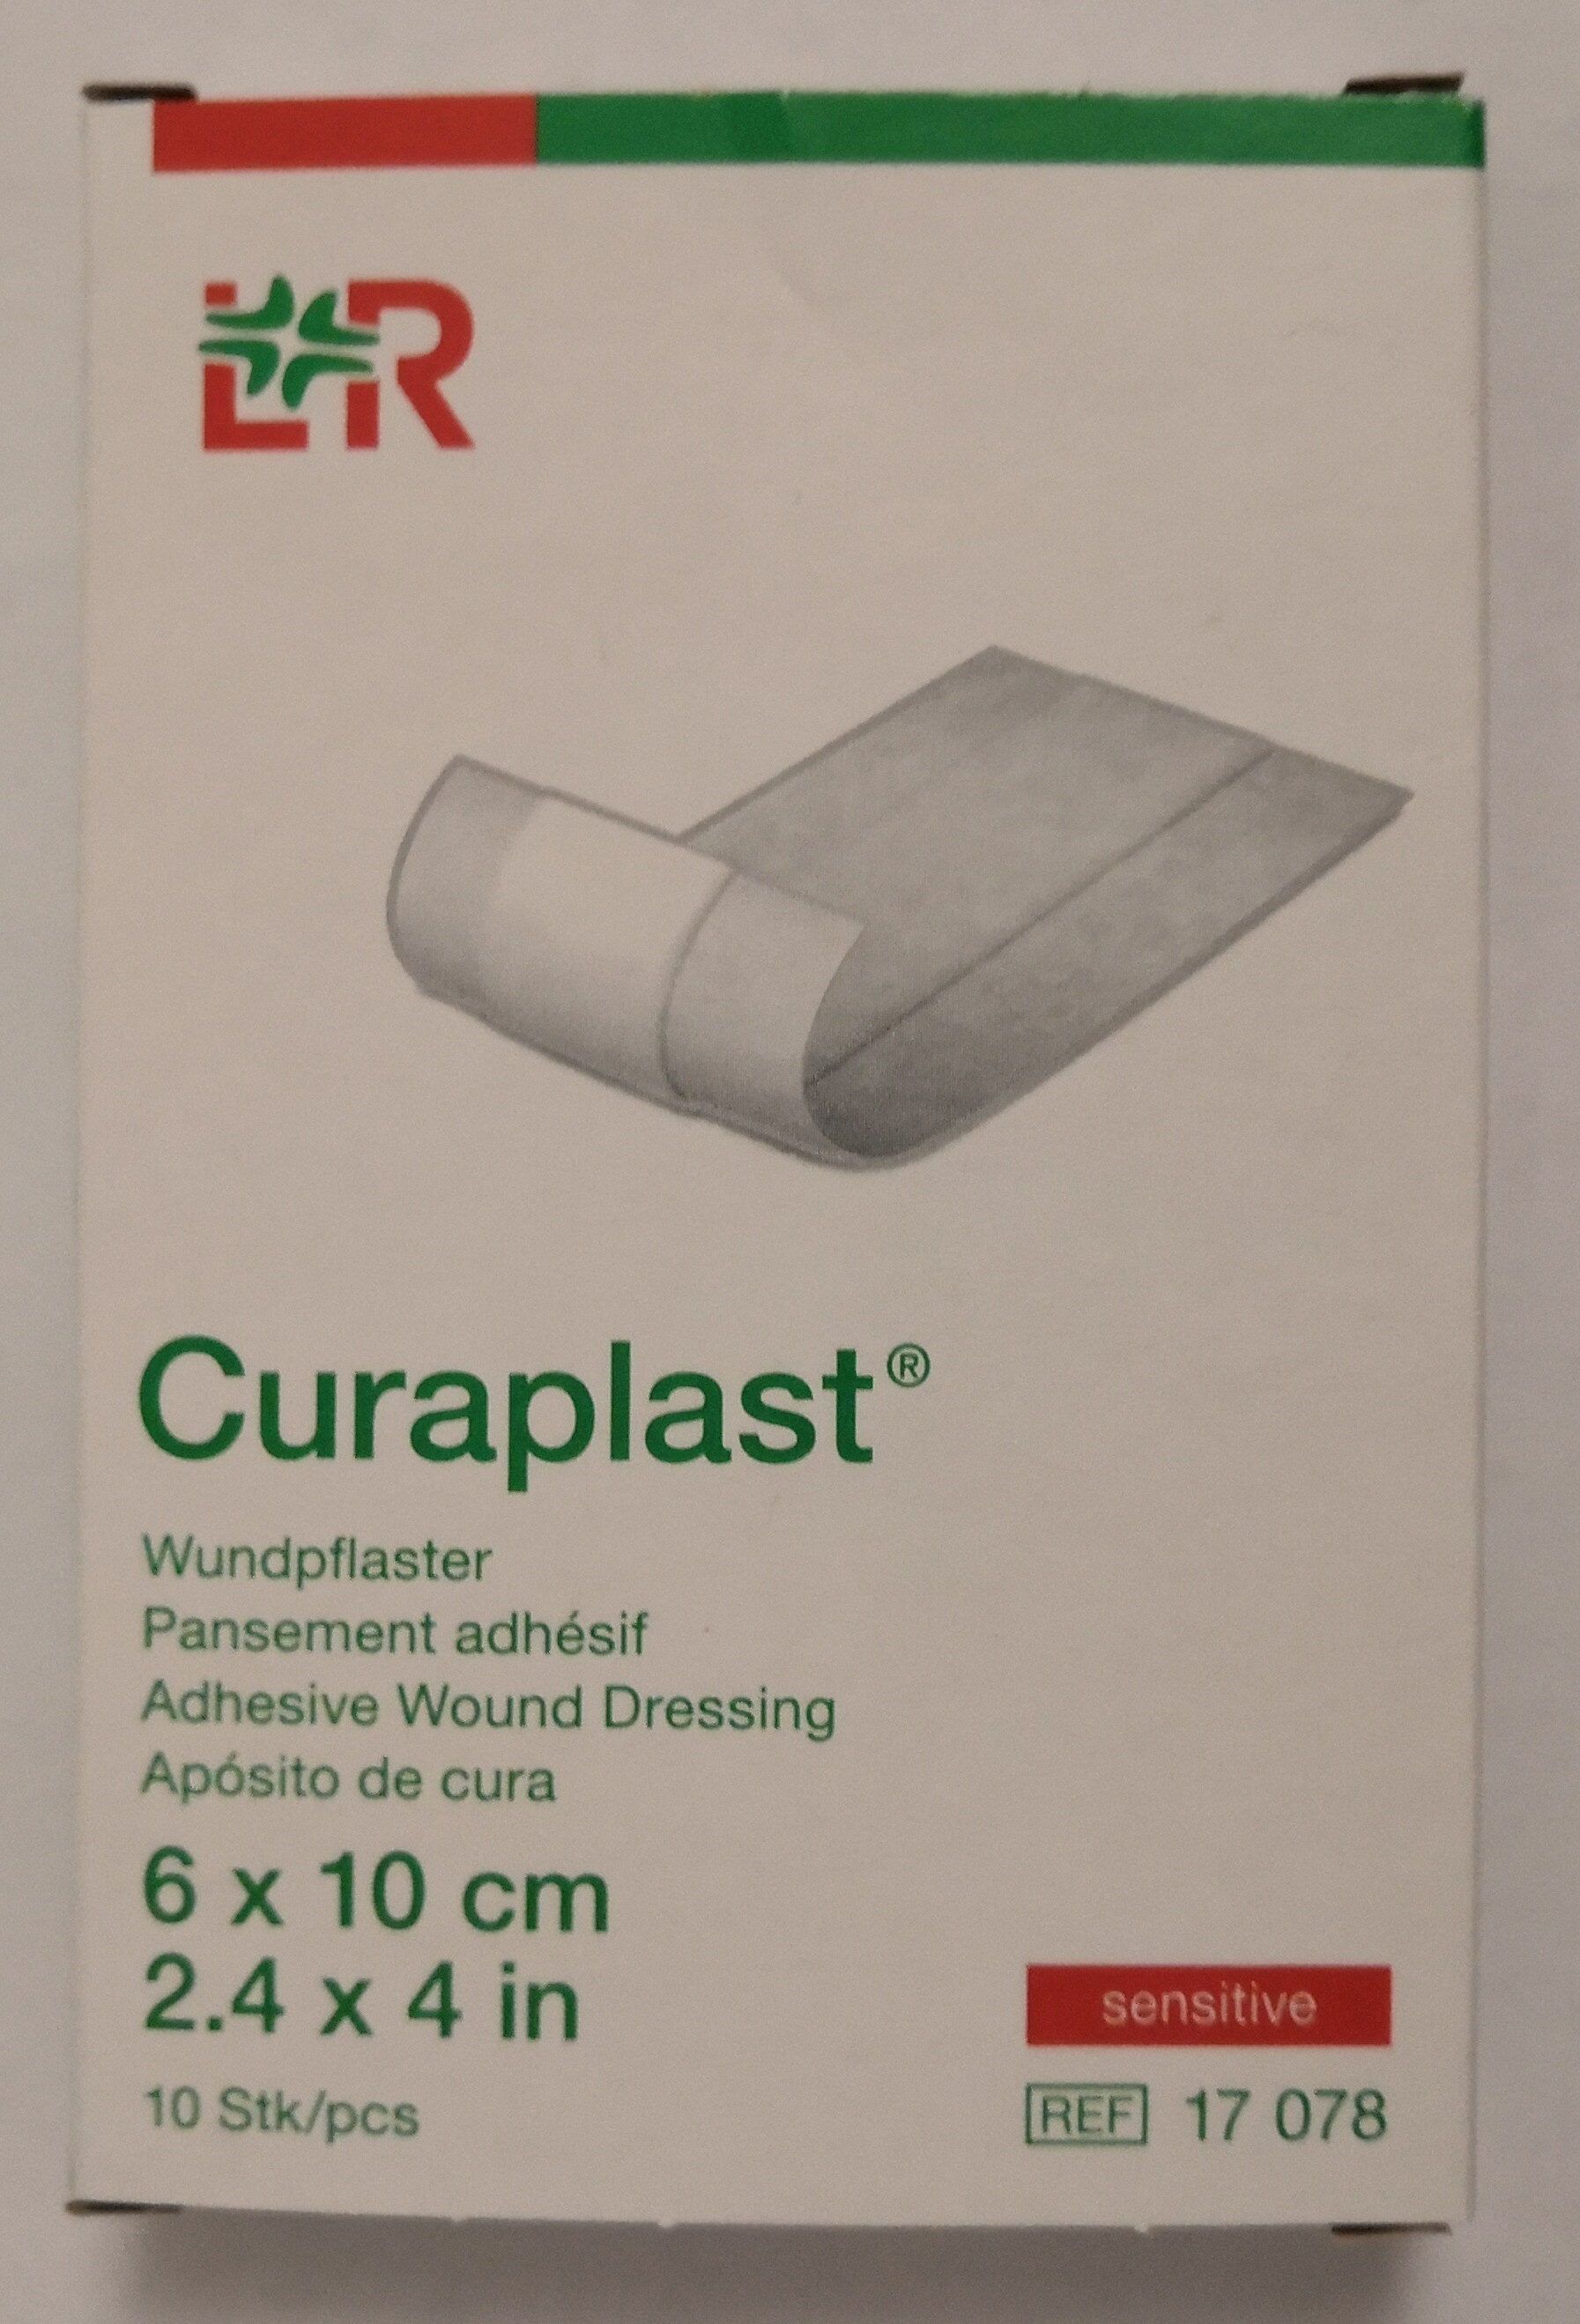 Curaplast 6 x 10 cm sensitive - Product - de